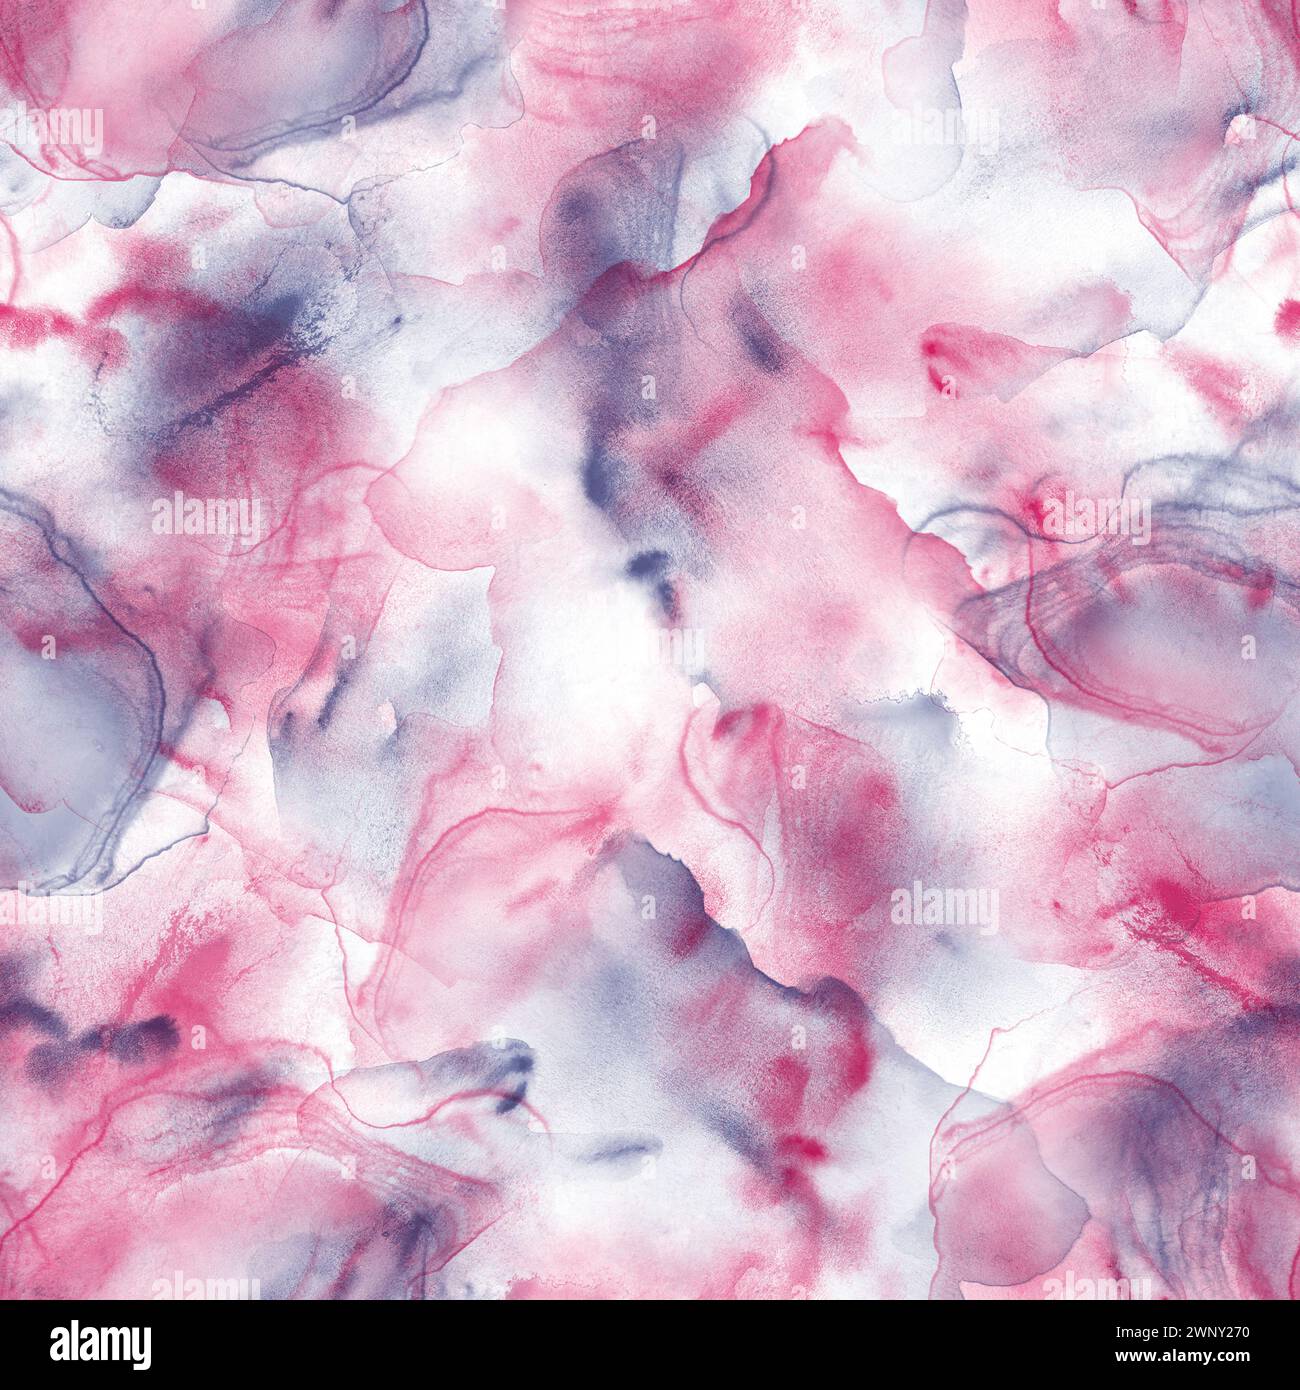 Acuarela abstracta mancha de fondo de lujo. Dibujado a mano rosa, manchas fluidas azules, salpicaduras patrón sin fisuras. Textura de acuarela. Imprimir para texto Foto de stock